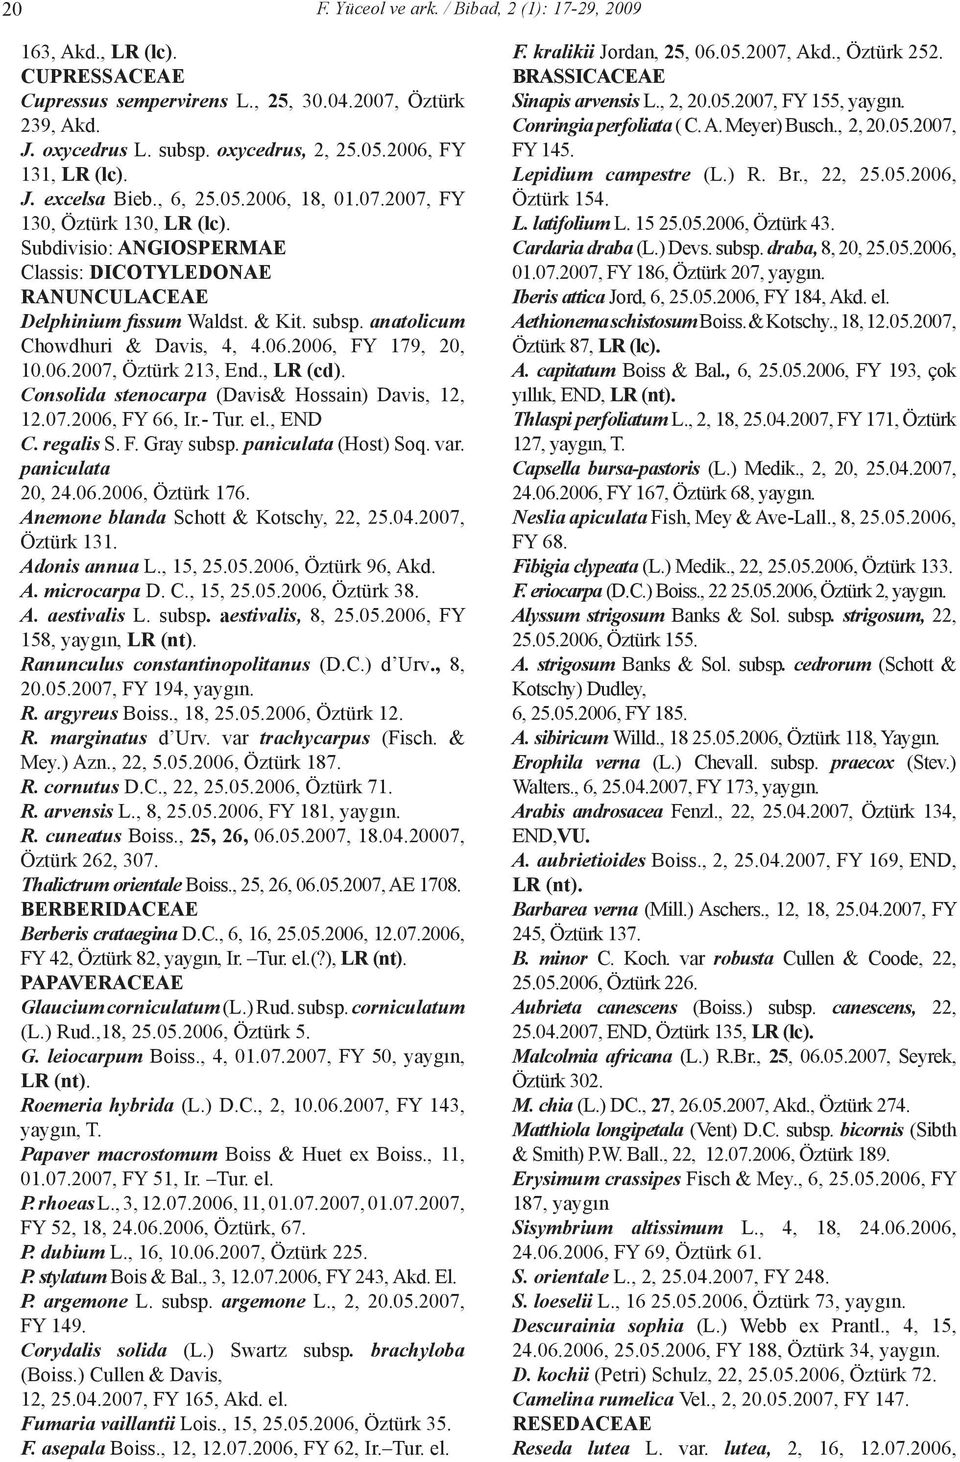 subsp. anatolicum Chowdhuri & Davis, 4, 4.06.2006, FY 179, 20, 10.06.2007, Öztürk 213, End., LR (cd). Consolida stenocarpa (Davis& Hossain) Davis, 12, 12.07.2006, FY 66, Ir.- Tur. el., END C.